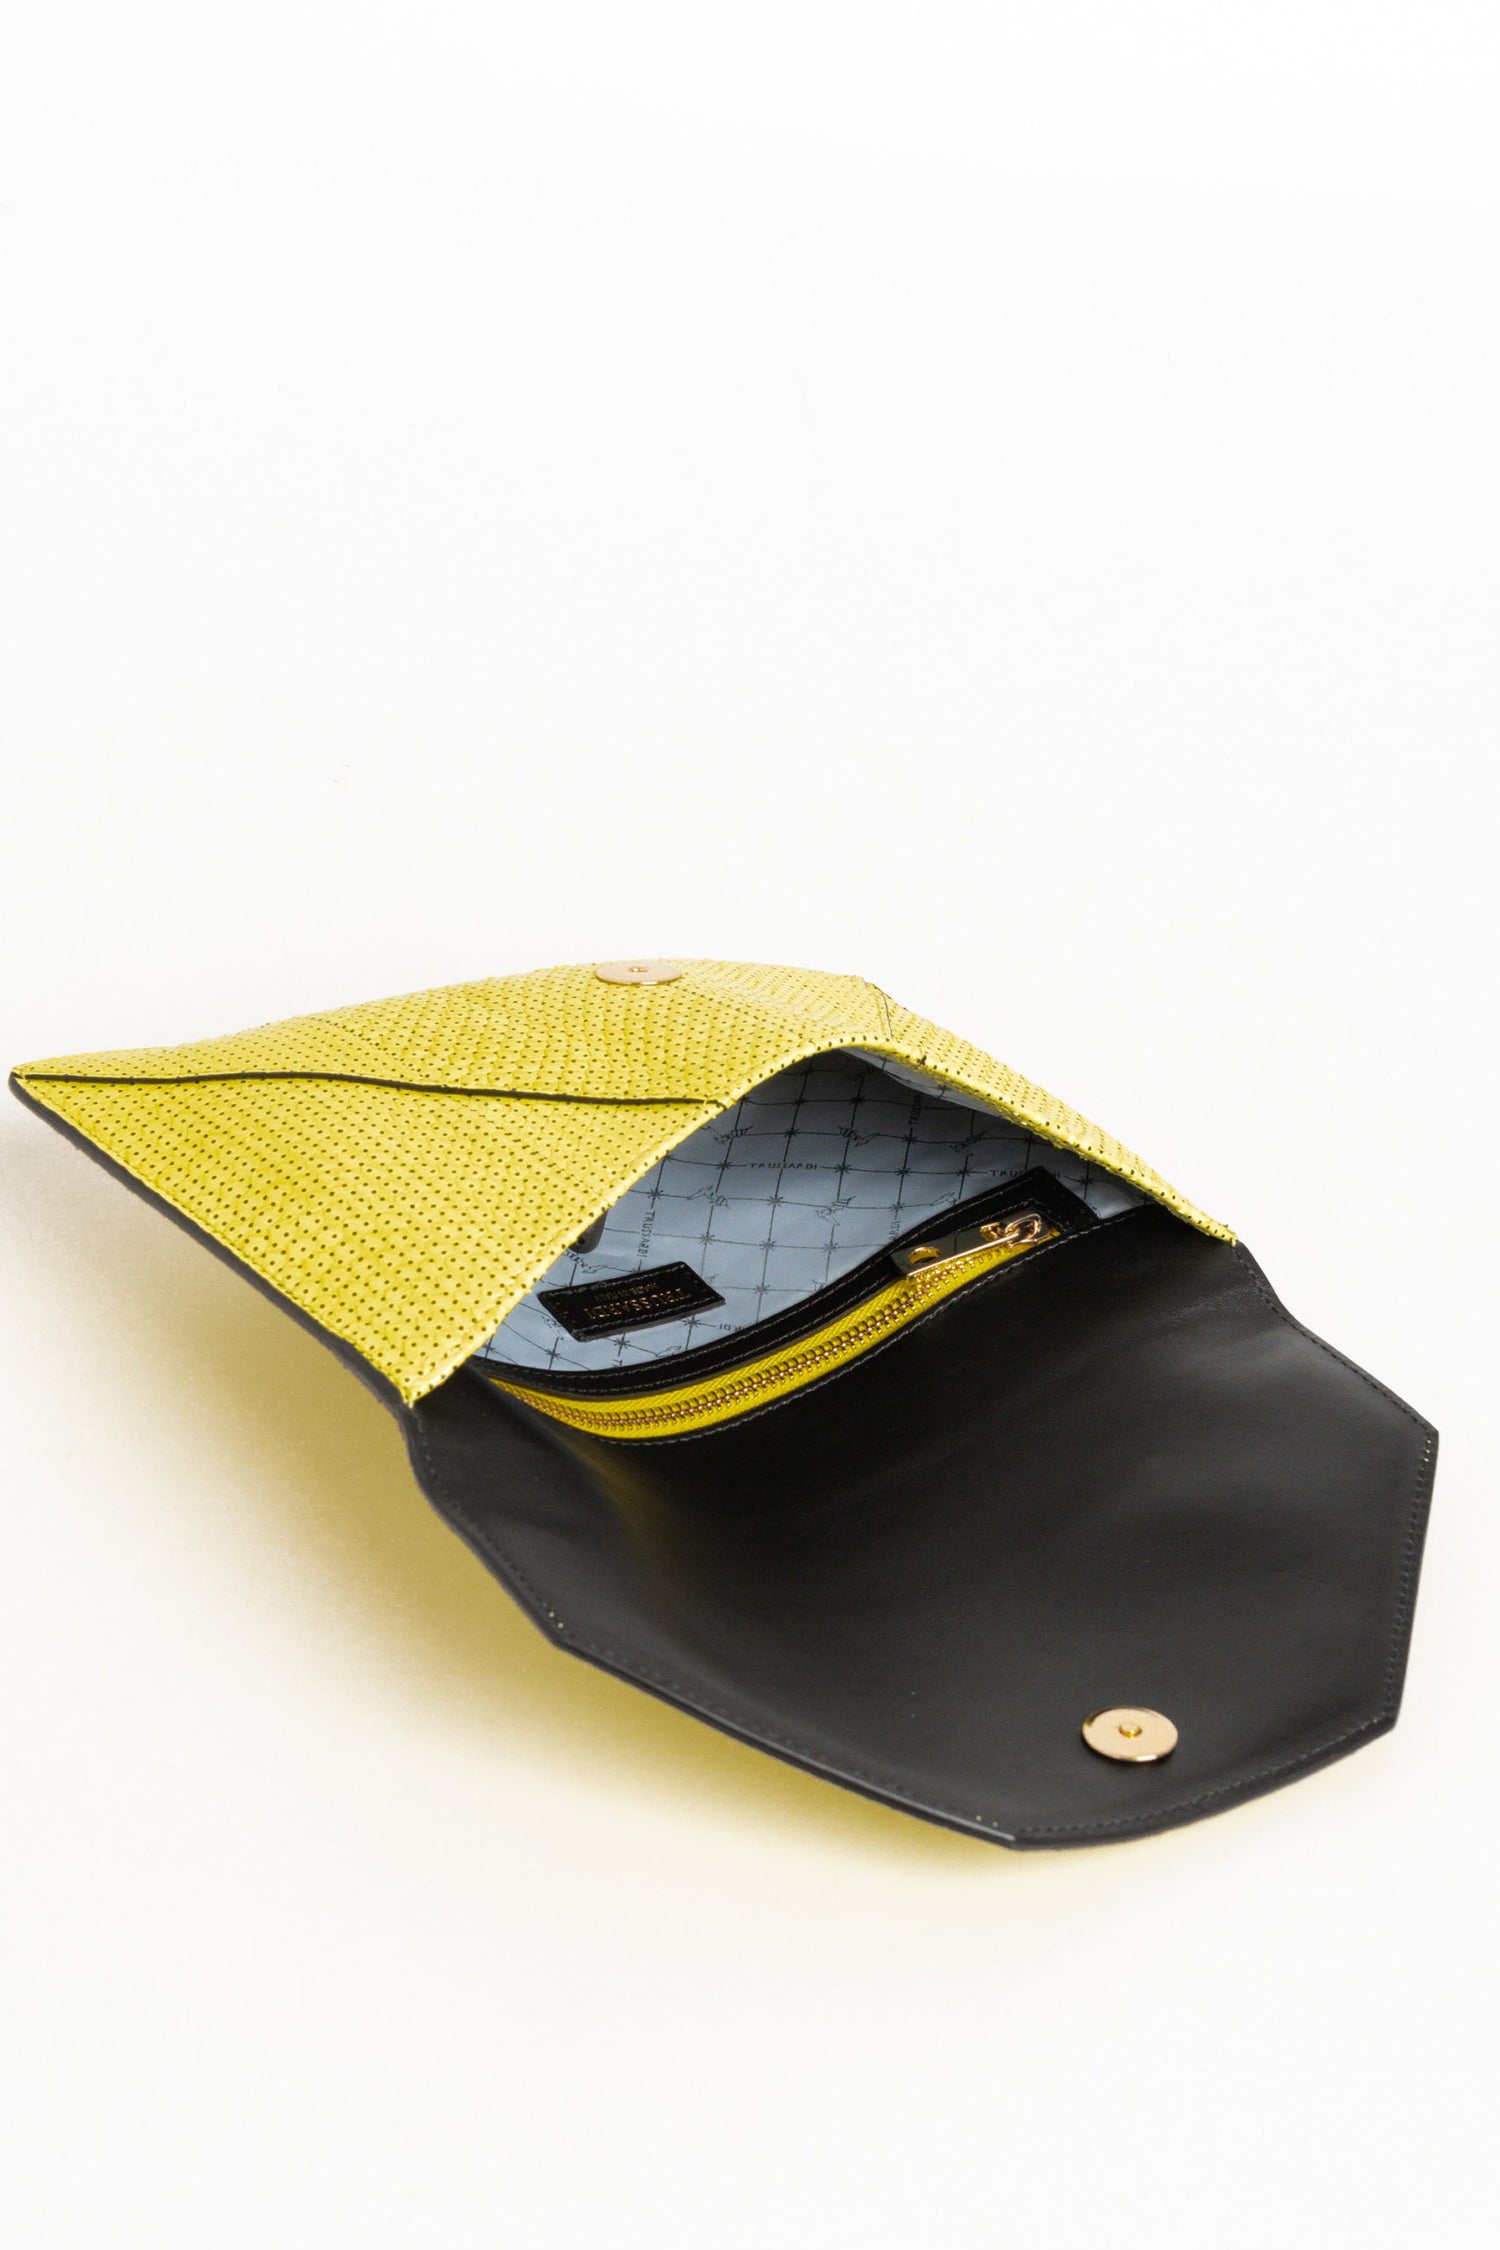 Trussardi Yellow Leather Clutch Bag - DEA STILOSA MILANO